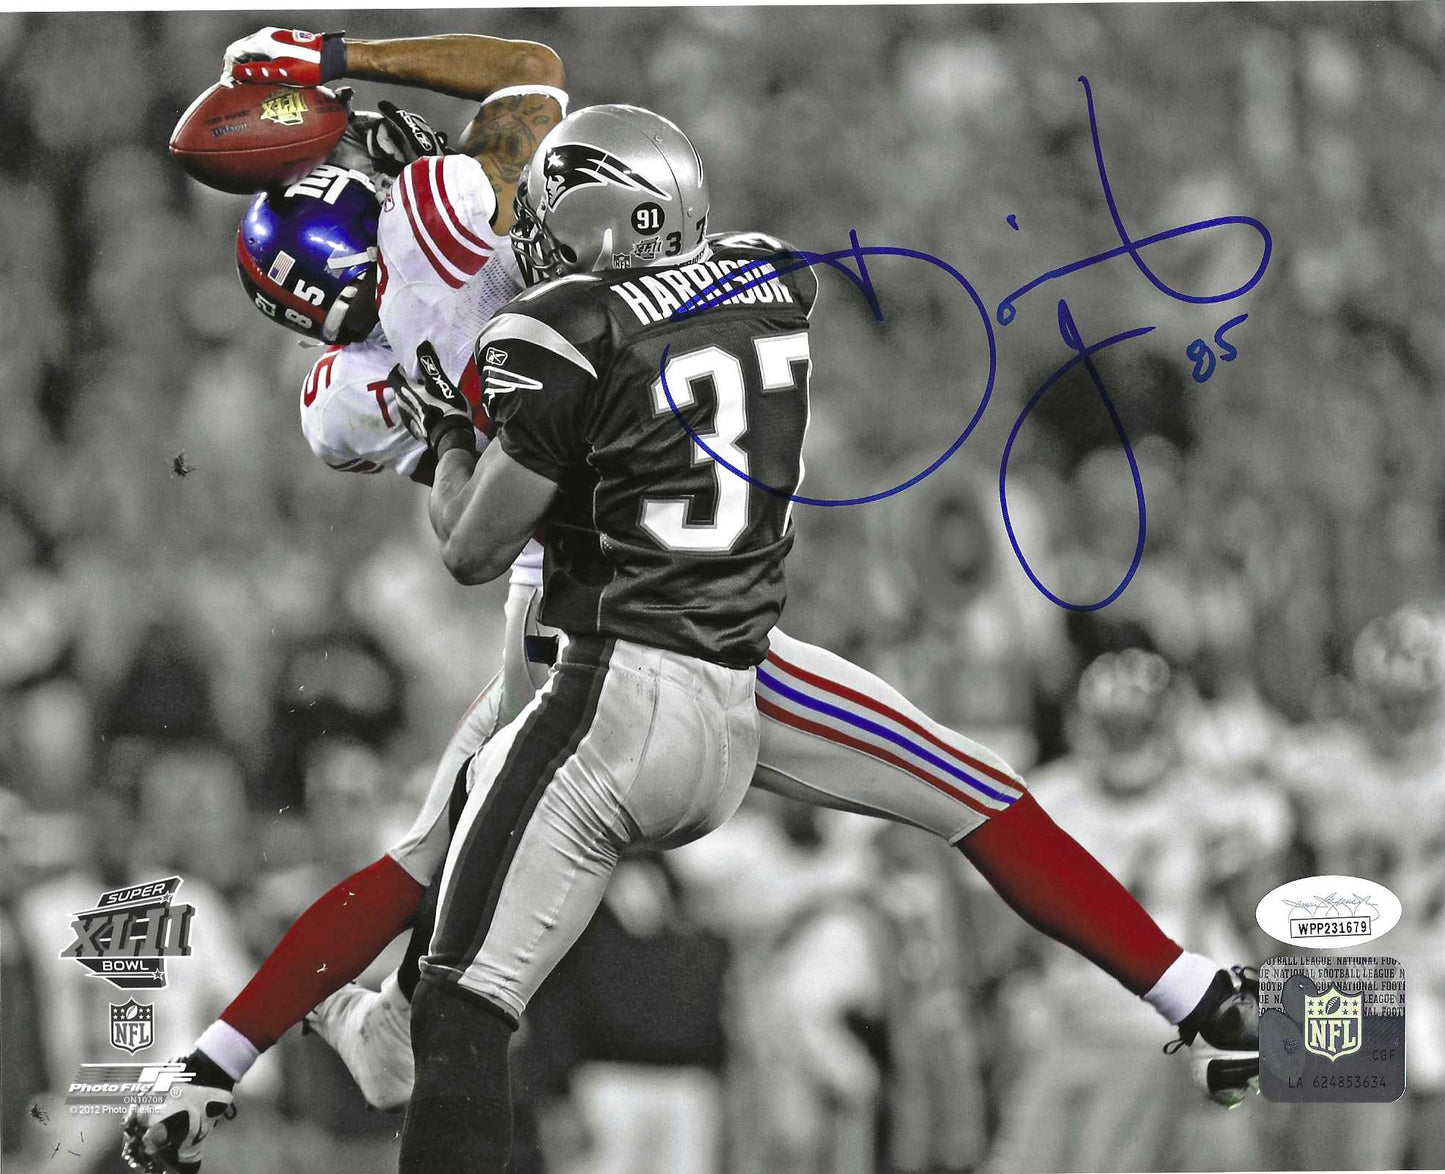 The New York Giants David Tyree Autographed 8x10 Spotlight Photo Of The Helmet Catch